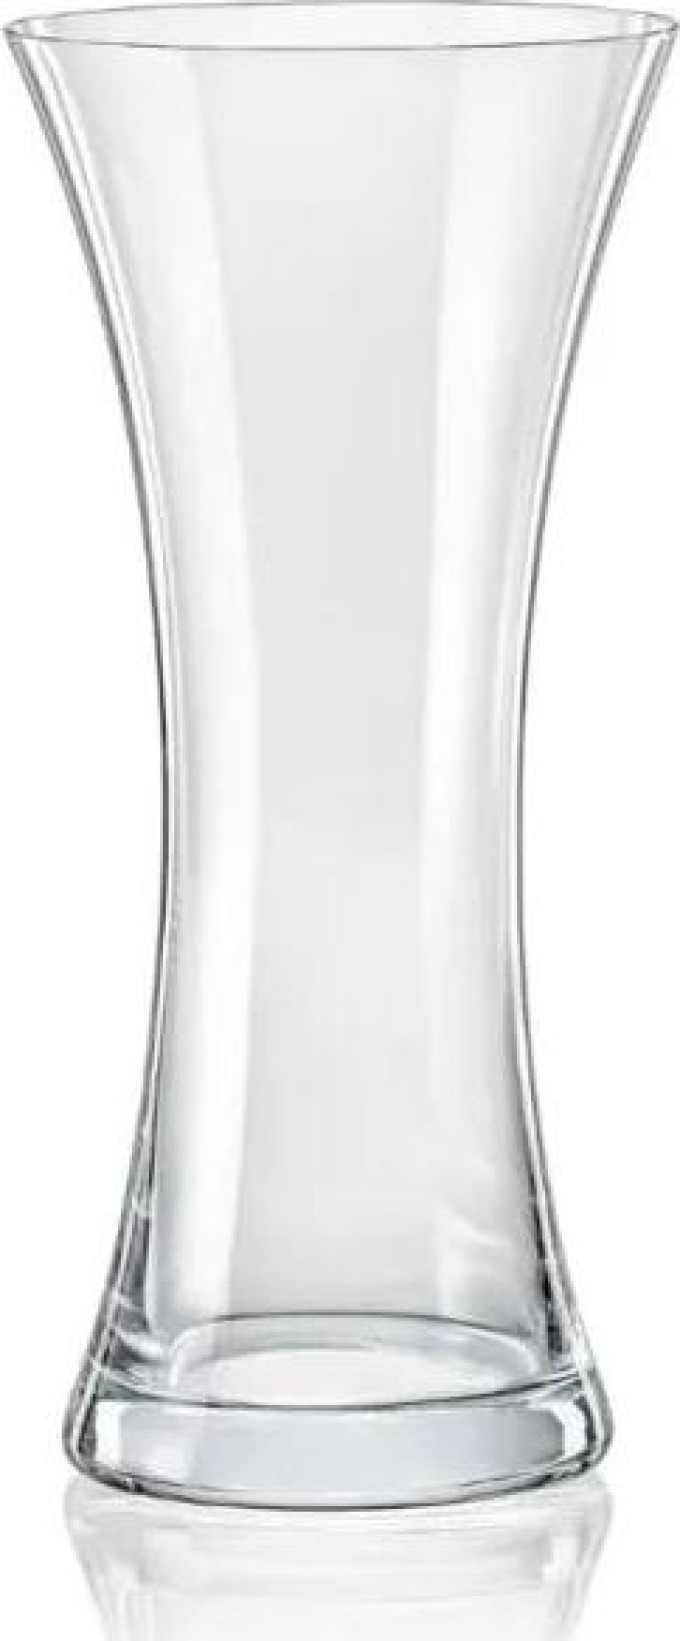 Crystalex - Bohemia Crystal Váza X, výška 300 mm, 1 ks